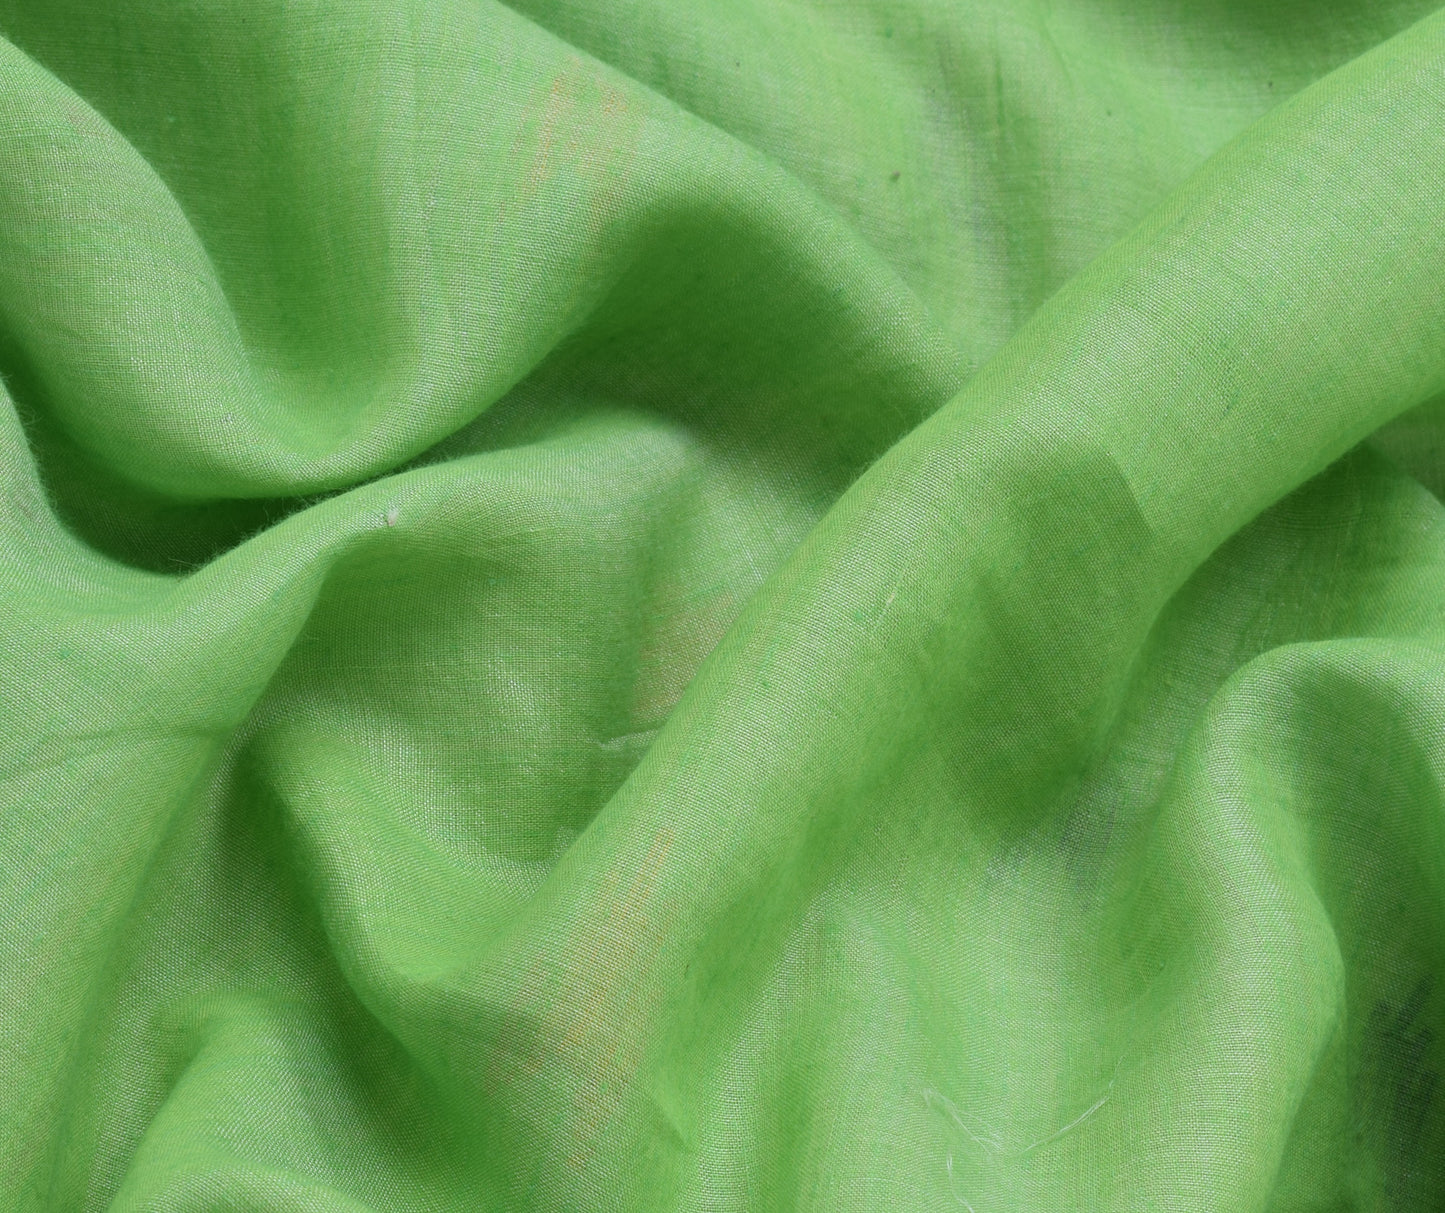 Sushila Vintage Green Indian Saree Pure Cotton Woven Floral Sari Decor Fabric